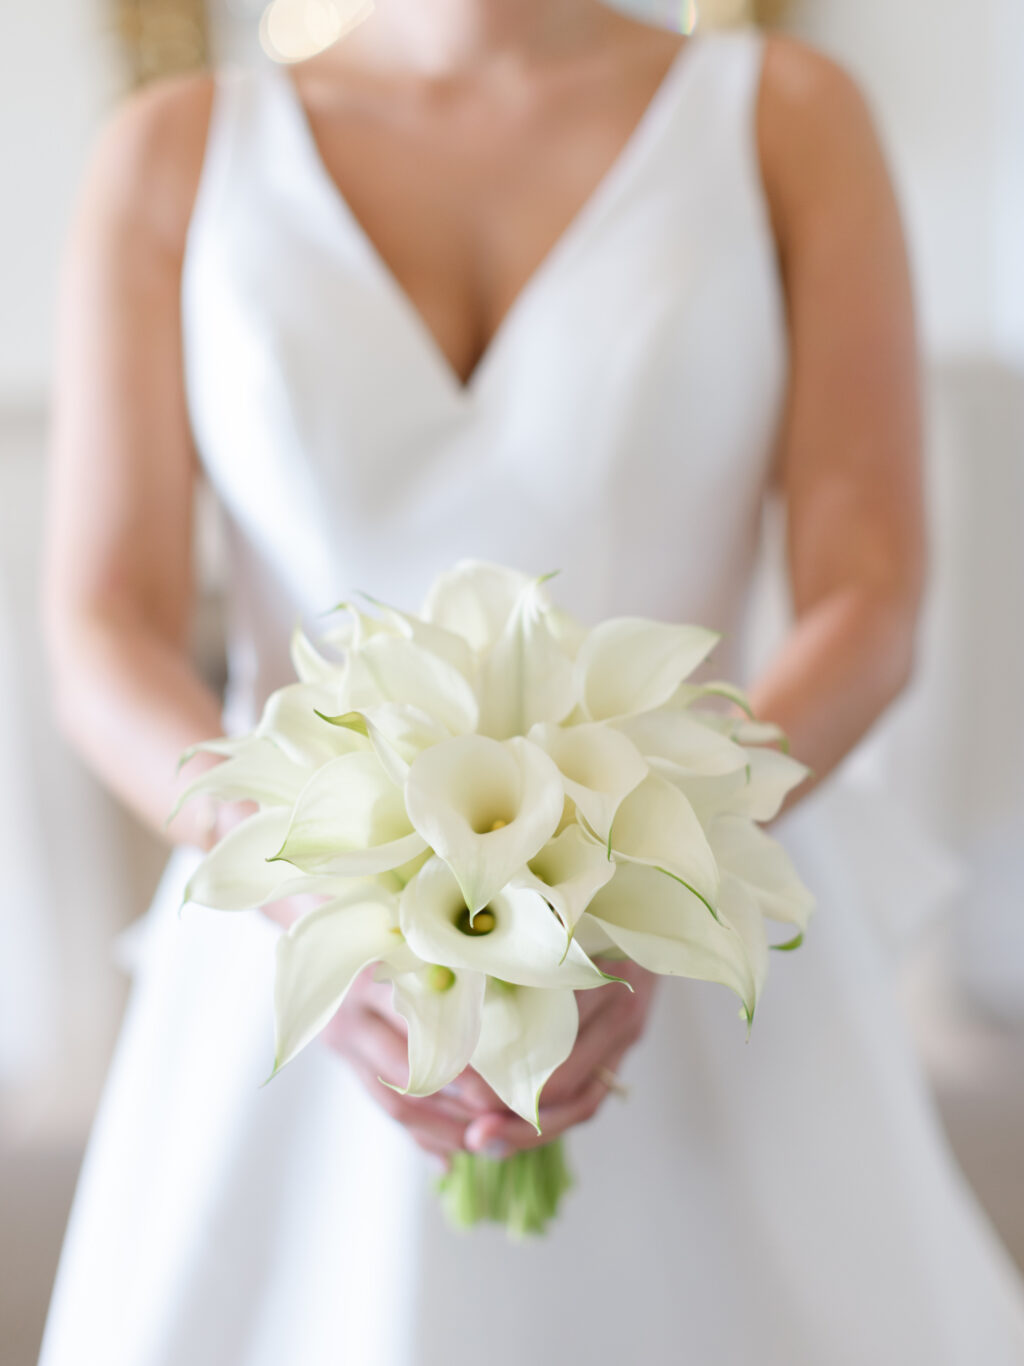 White Calla Lily Bridal Wedding Bouquet Ideas